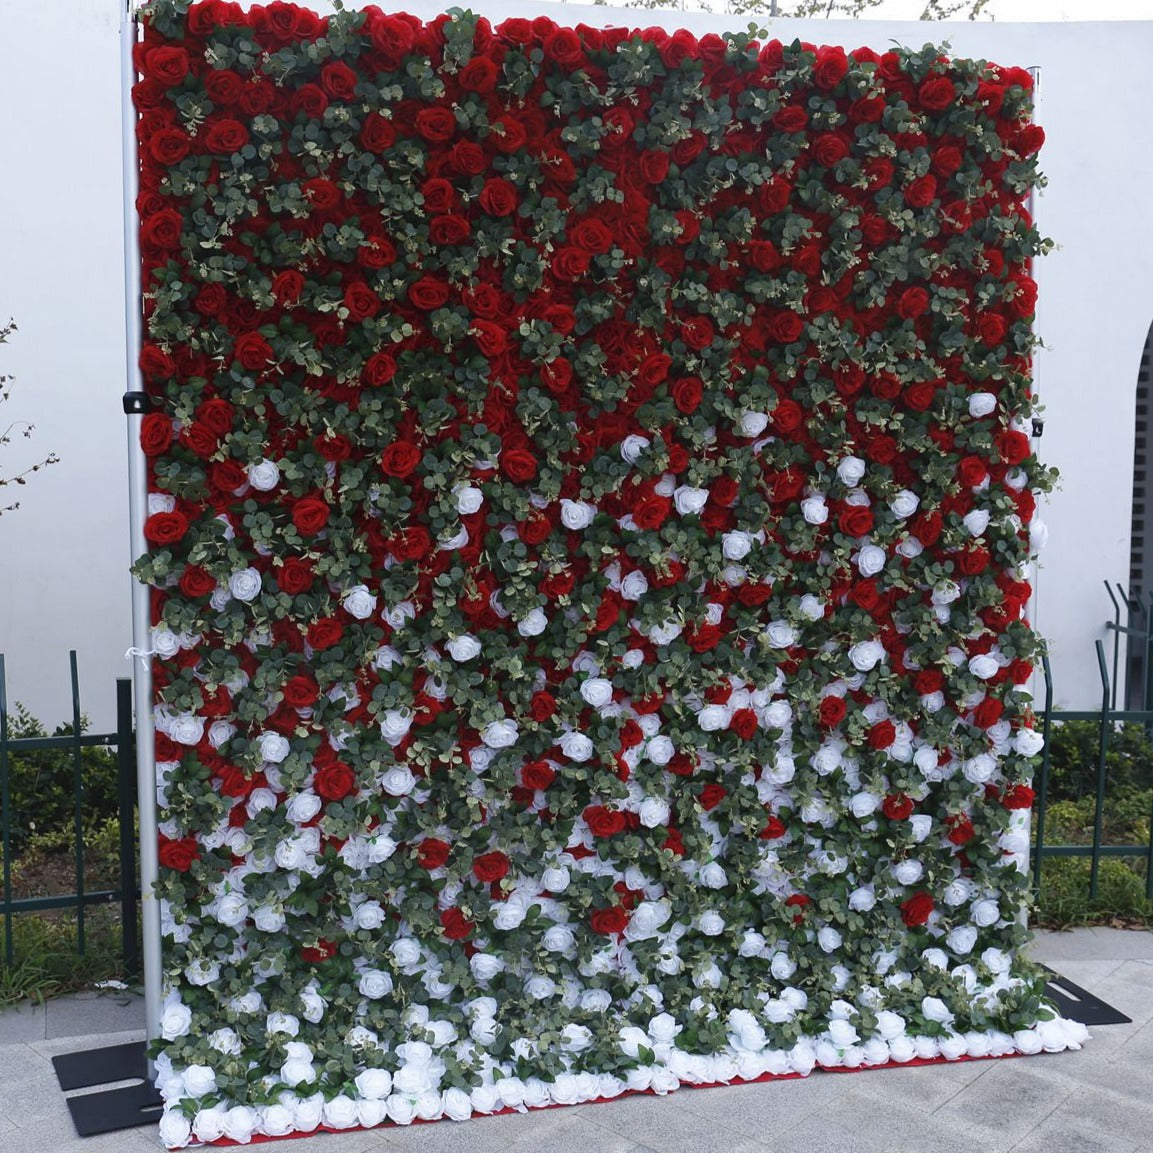 3D Artificial Flower Wall Arrangement Wedding Party Birthday Backdrop Decor HQ3525